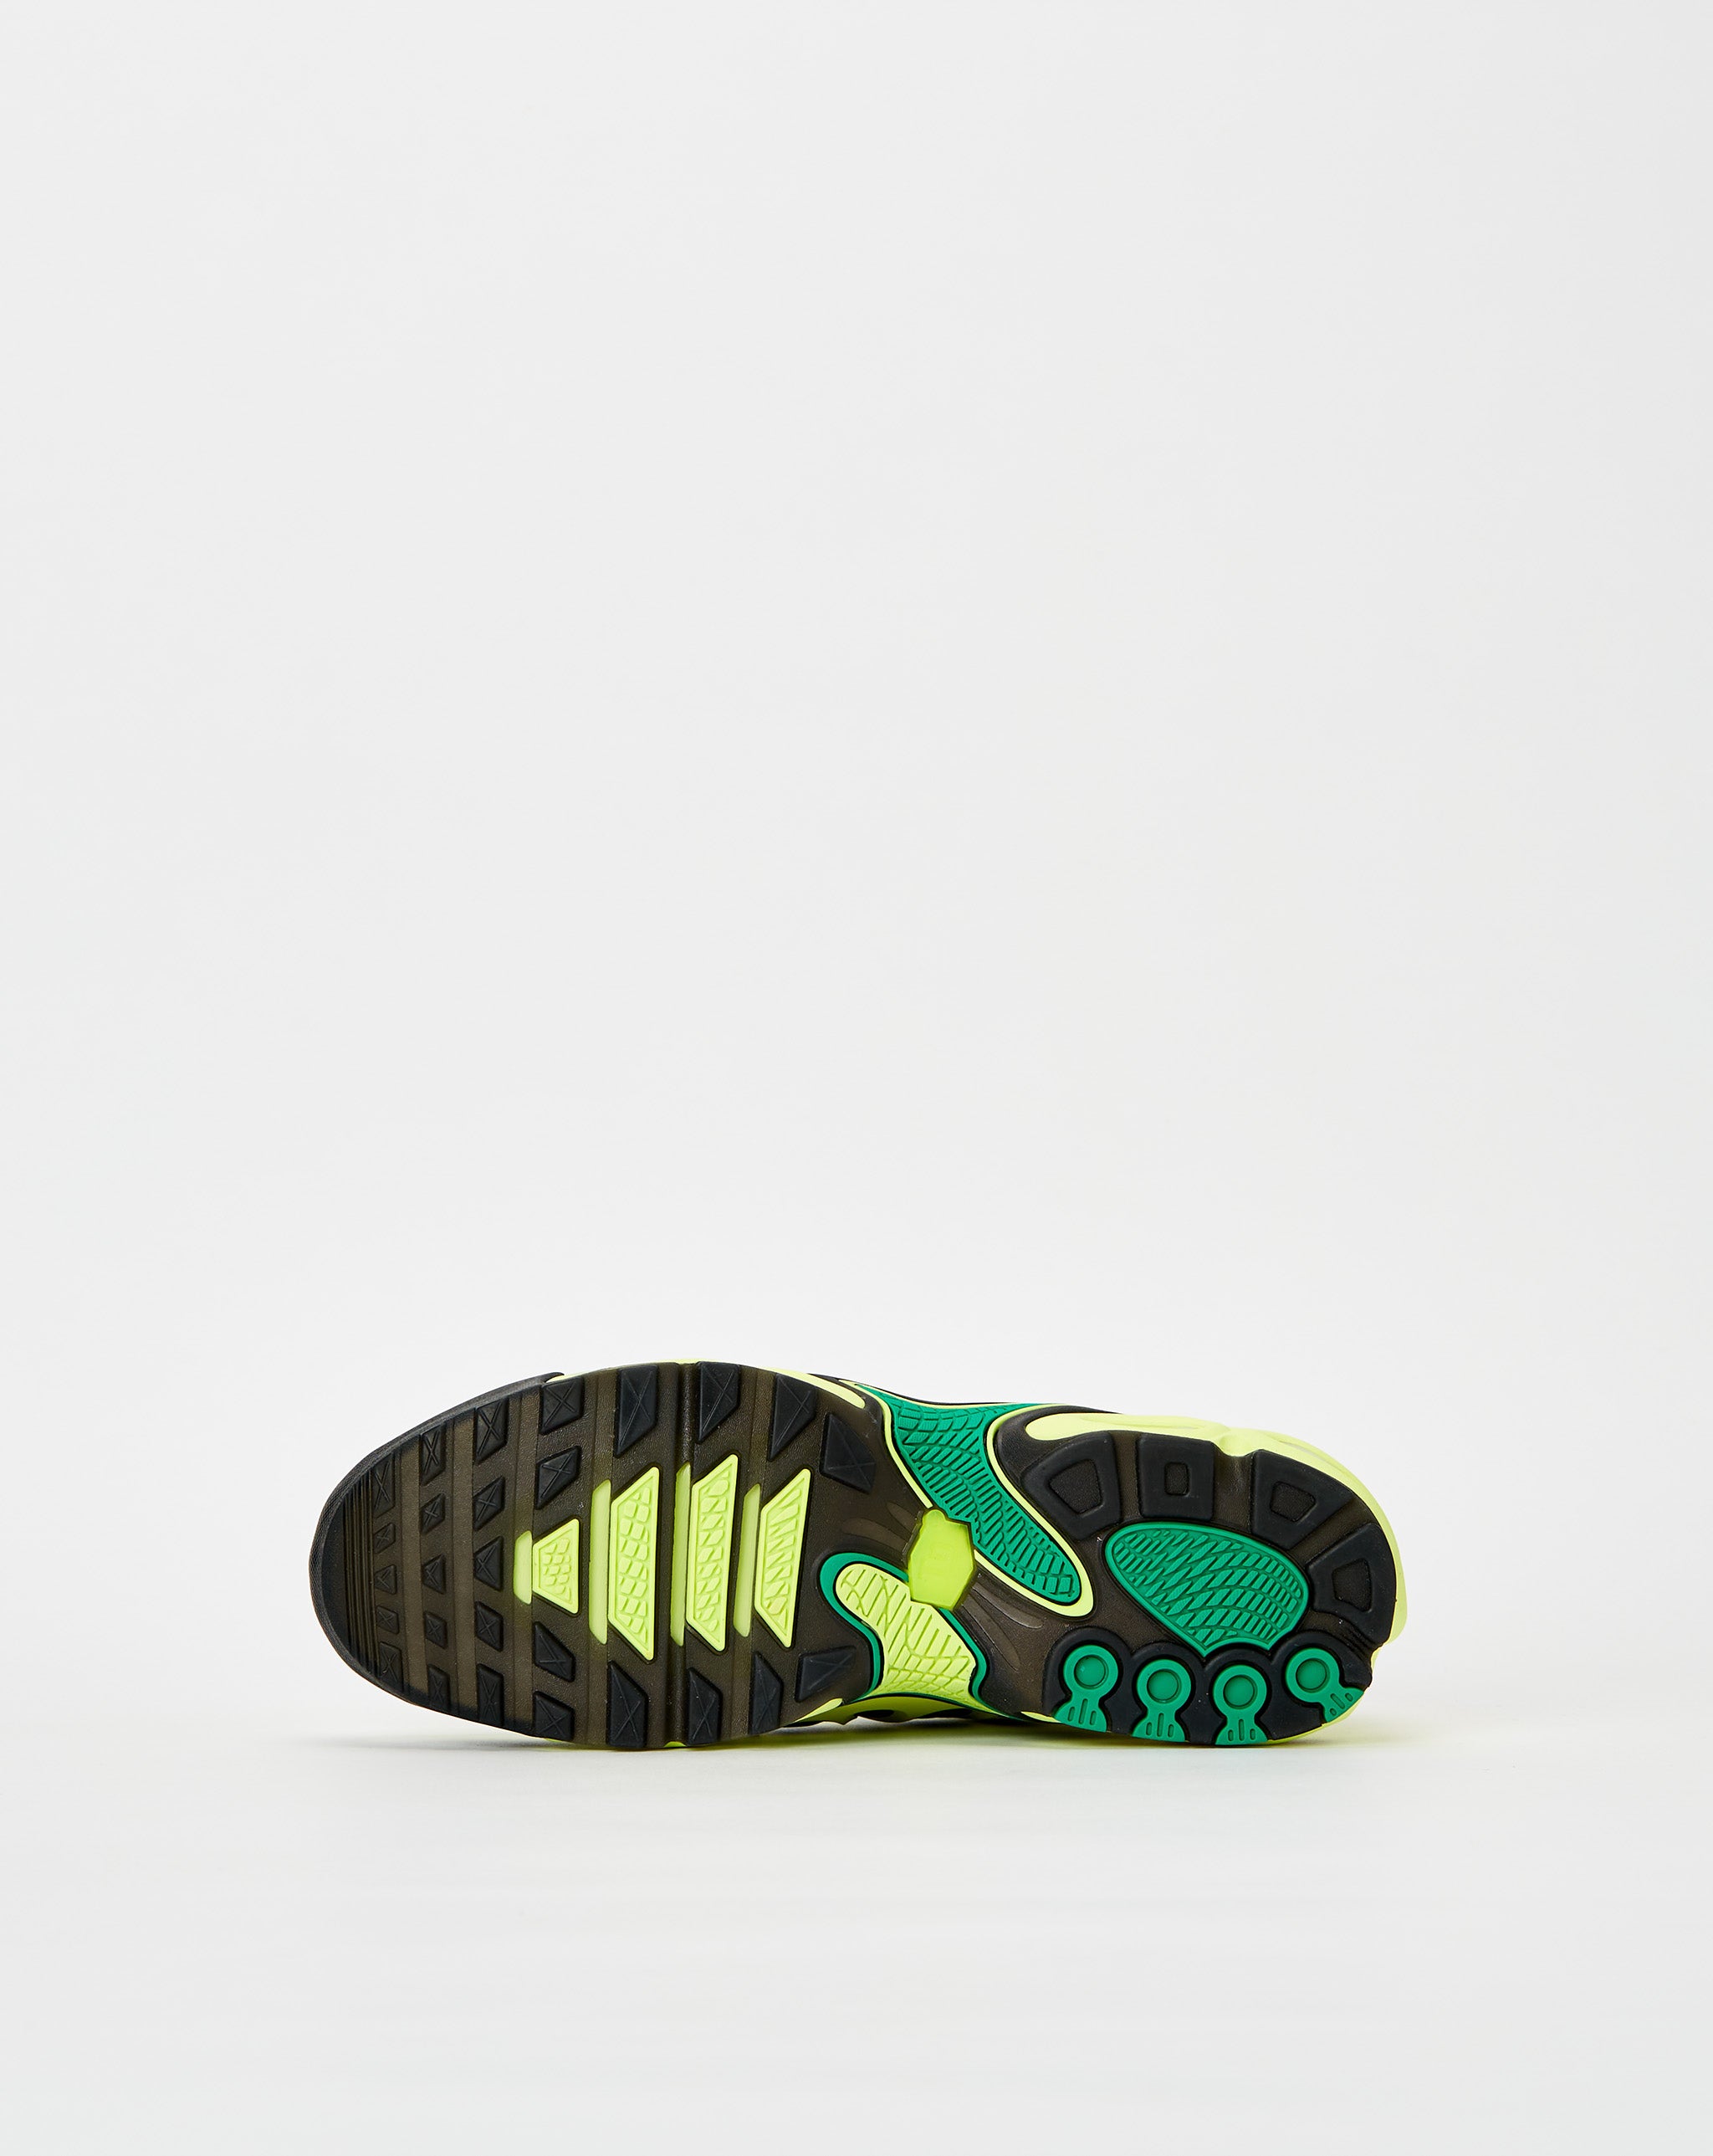 Nike nike 6.0 zoom mogan 2 mens shoe sandals size  - Cheap Erlebniswelt-fliegenfischen Jordan outlet